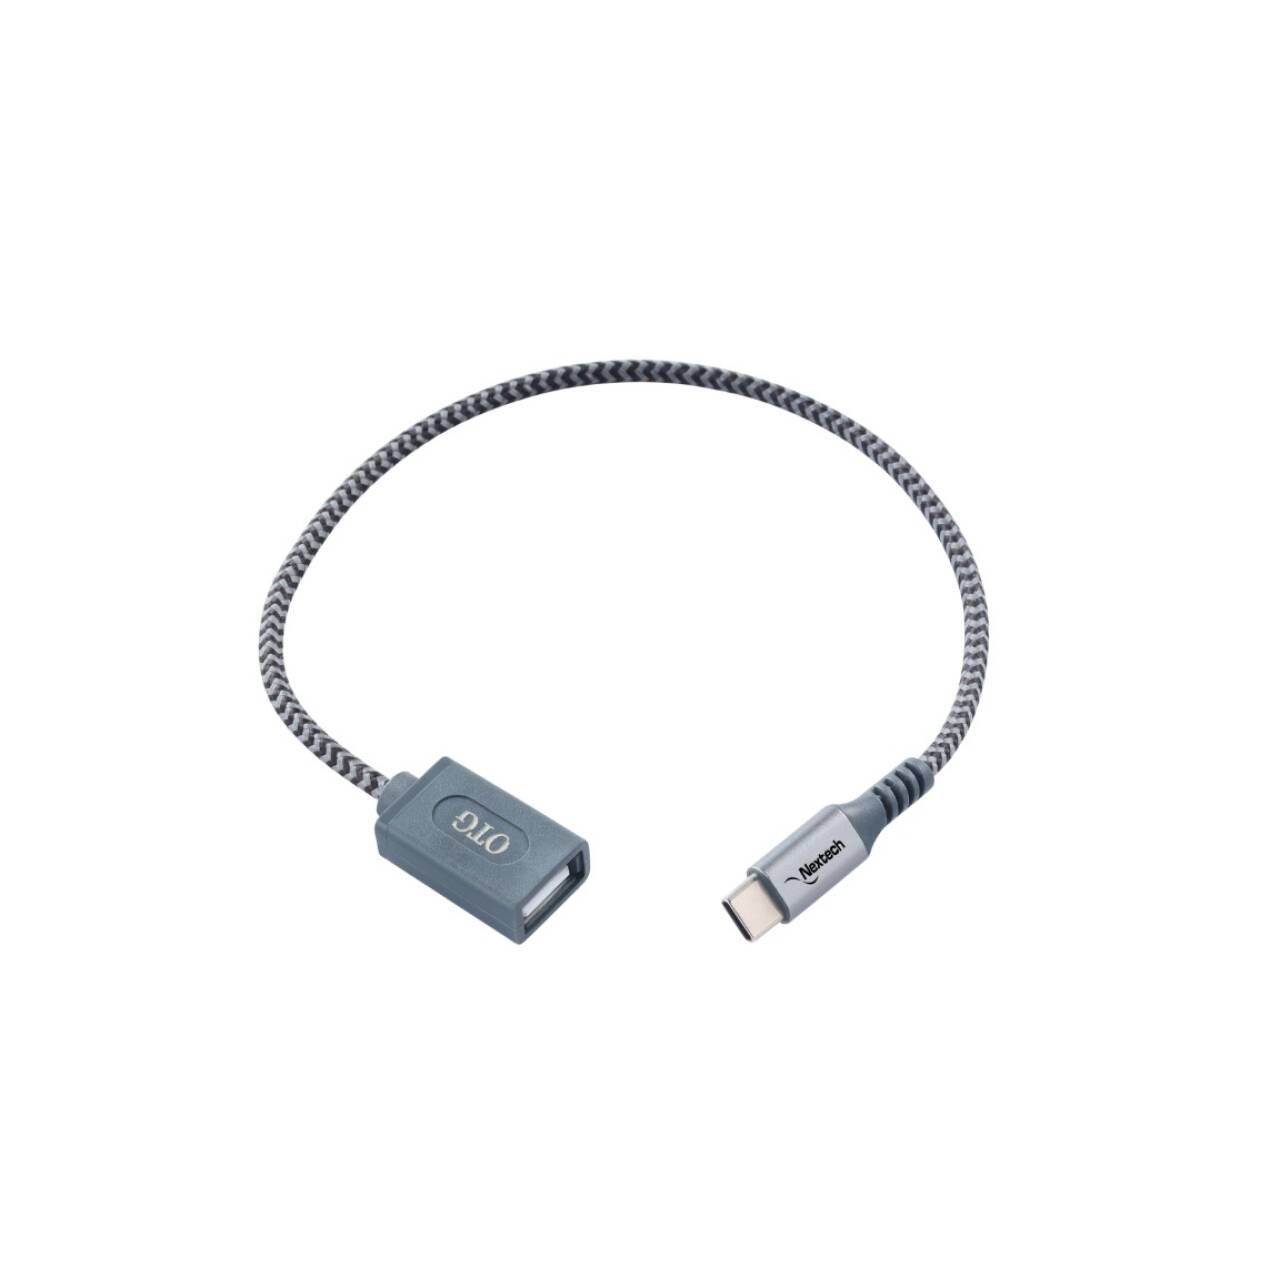 Cable OTG USB C a USB 3.0 Hembra TrauTech De 0.15 mts